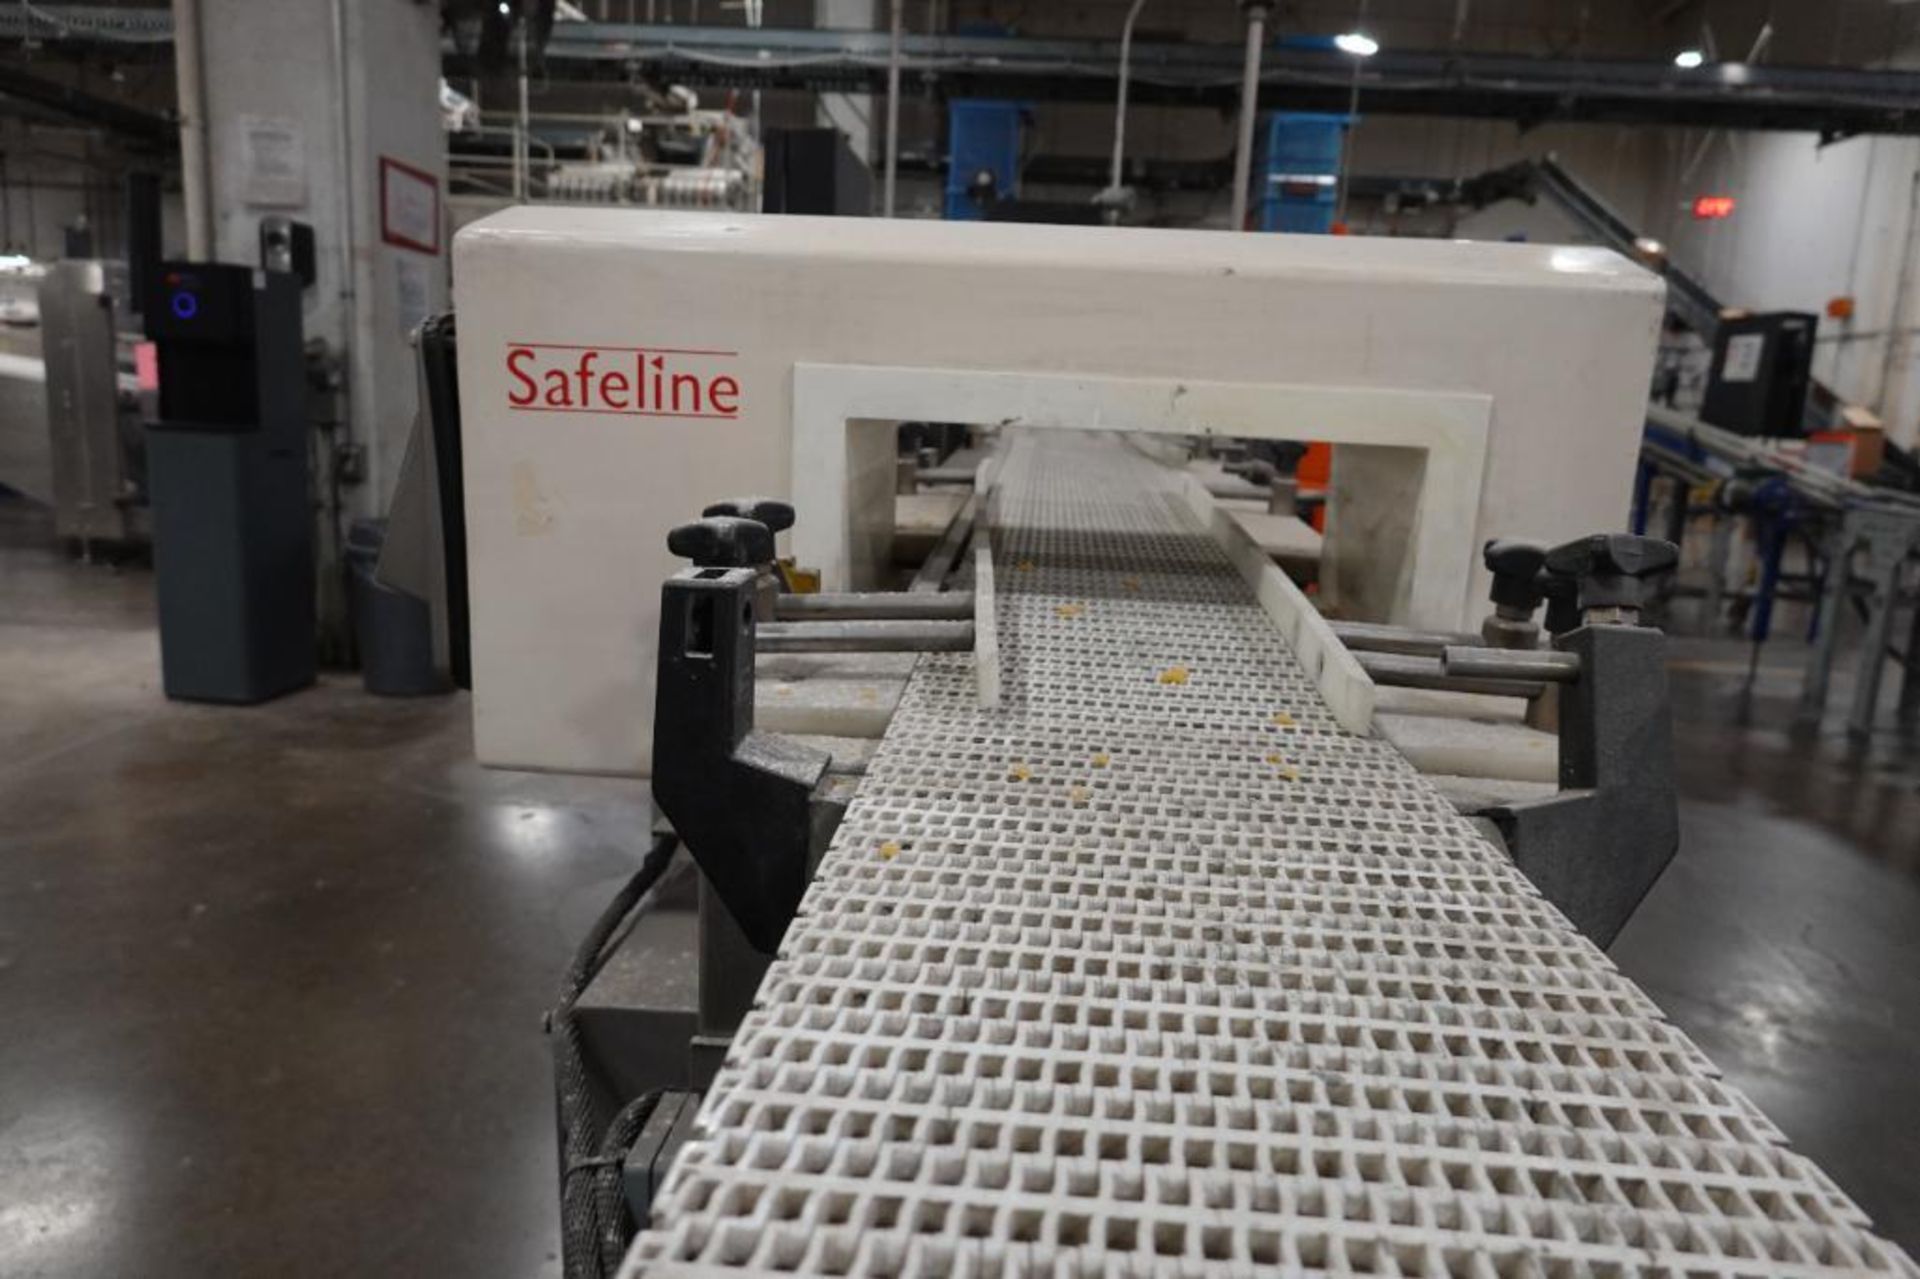 Safeline metal detector with conveyor - Image 5 of 11